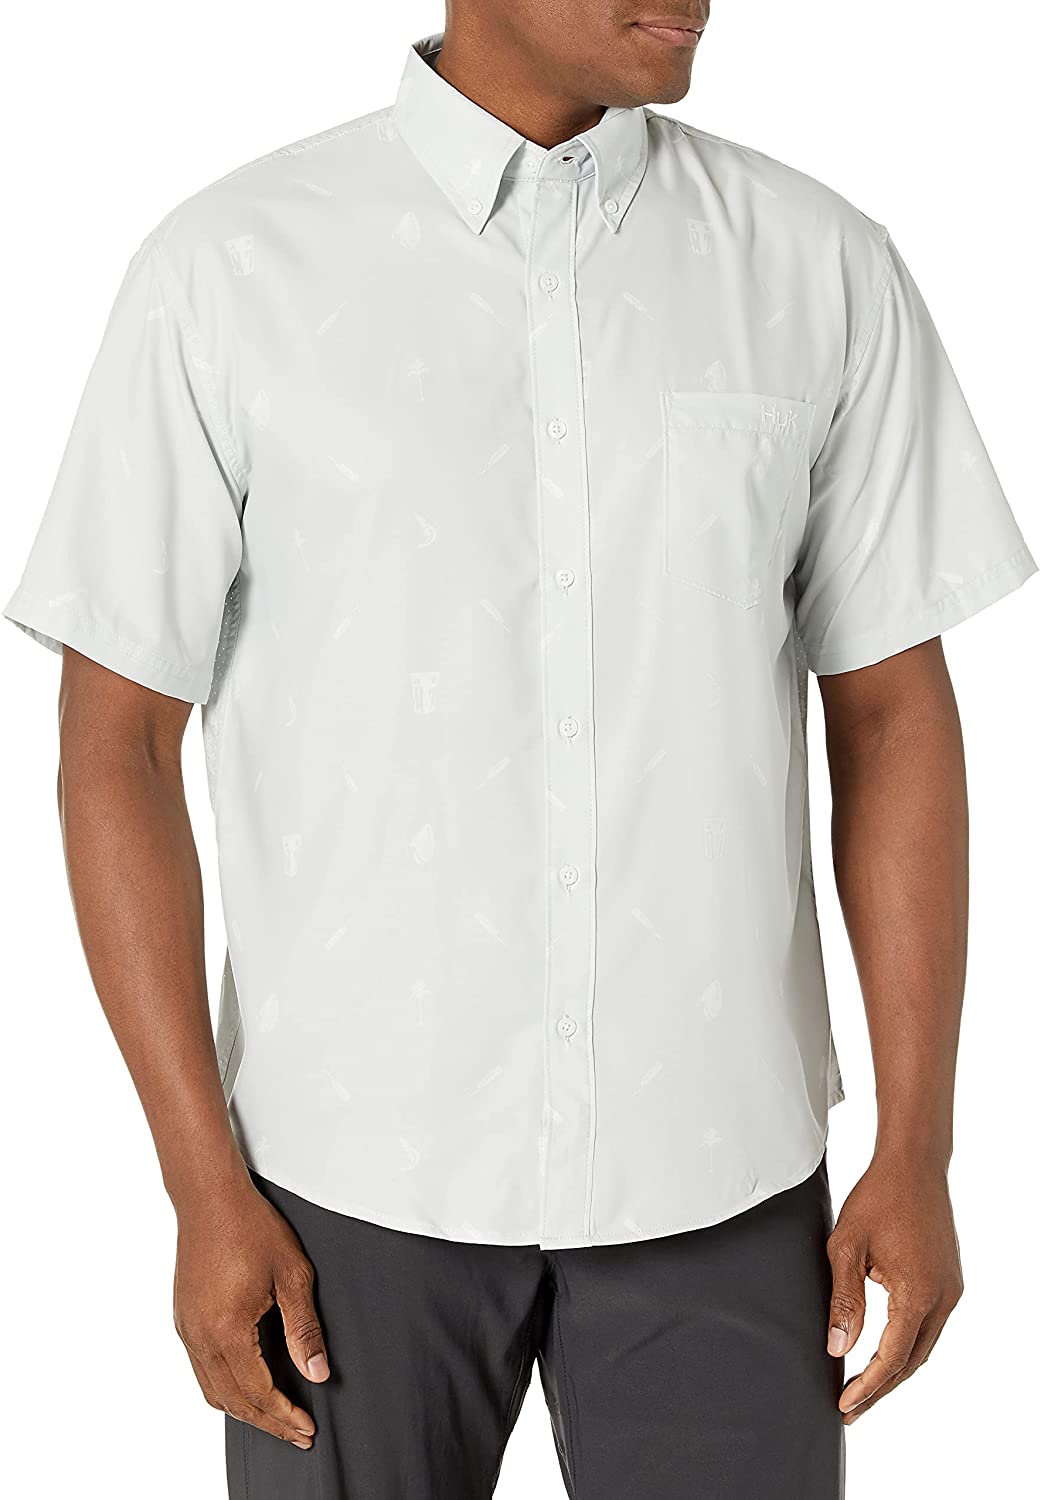 HUK Fishing Gray White Logo Short Sleeve Shirt Mens XL NWT New 